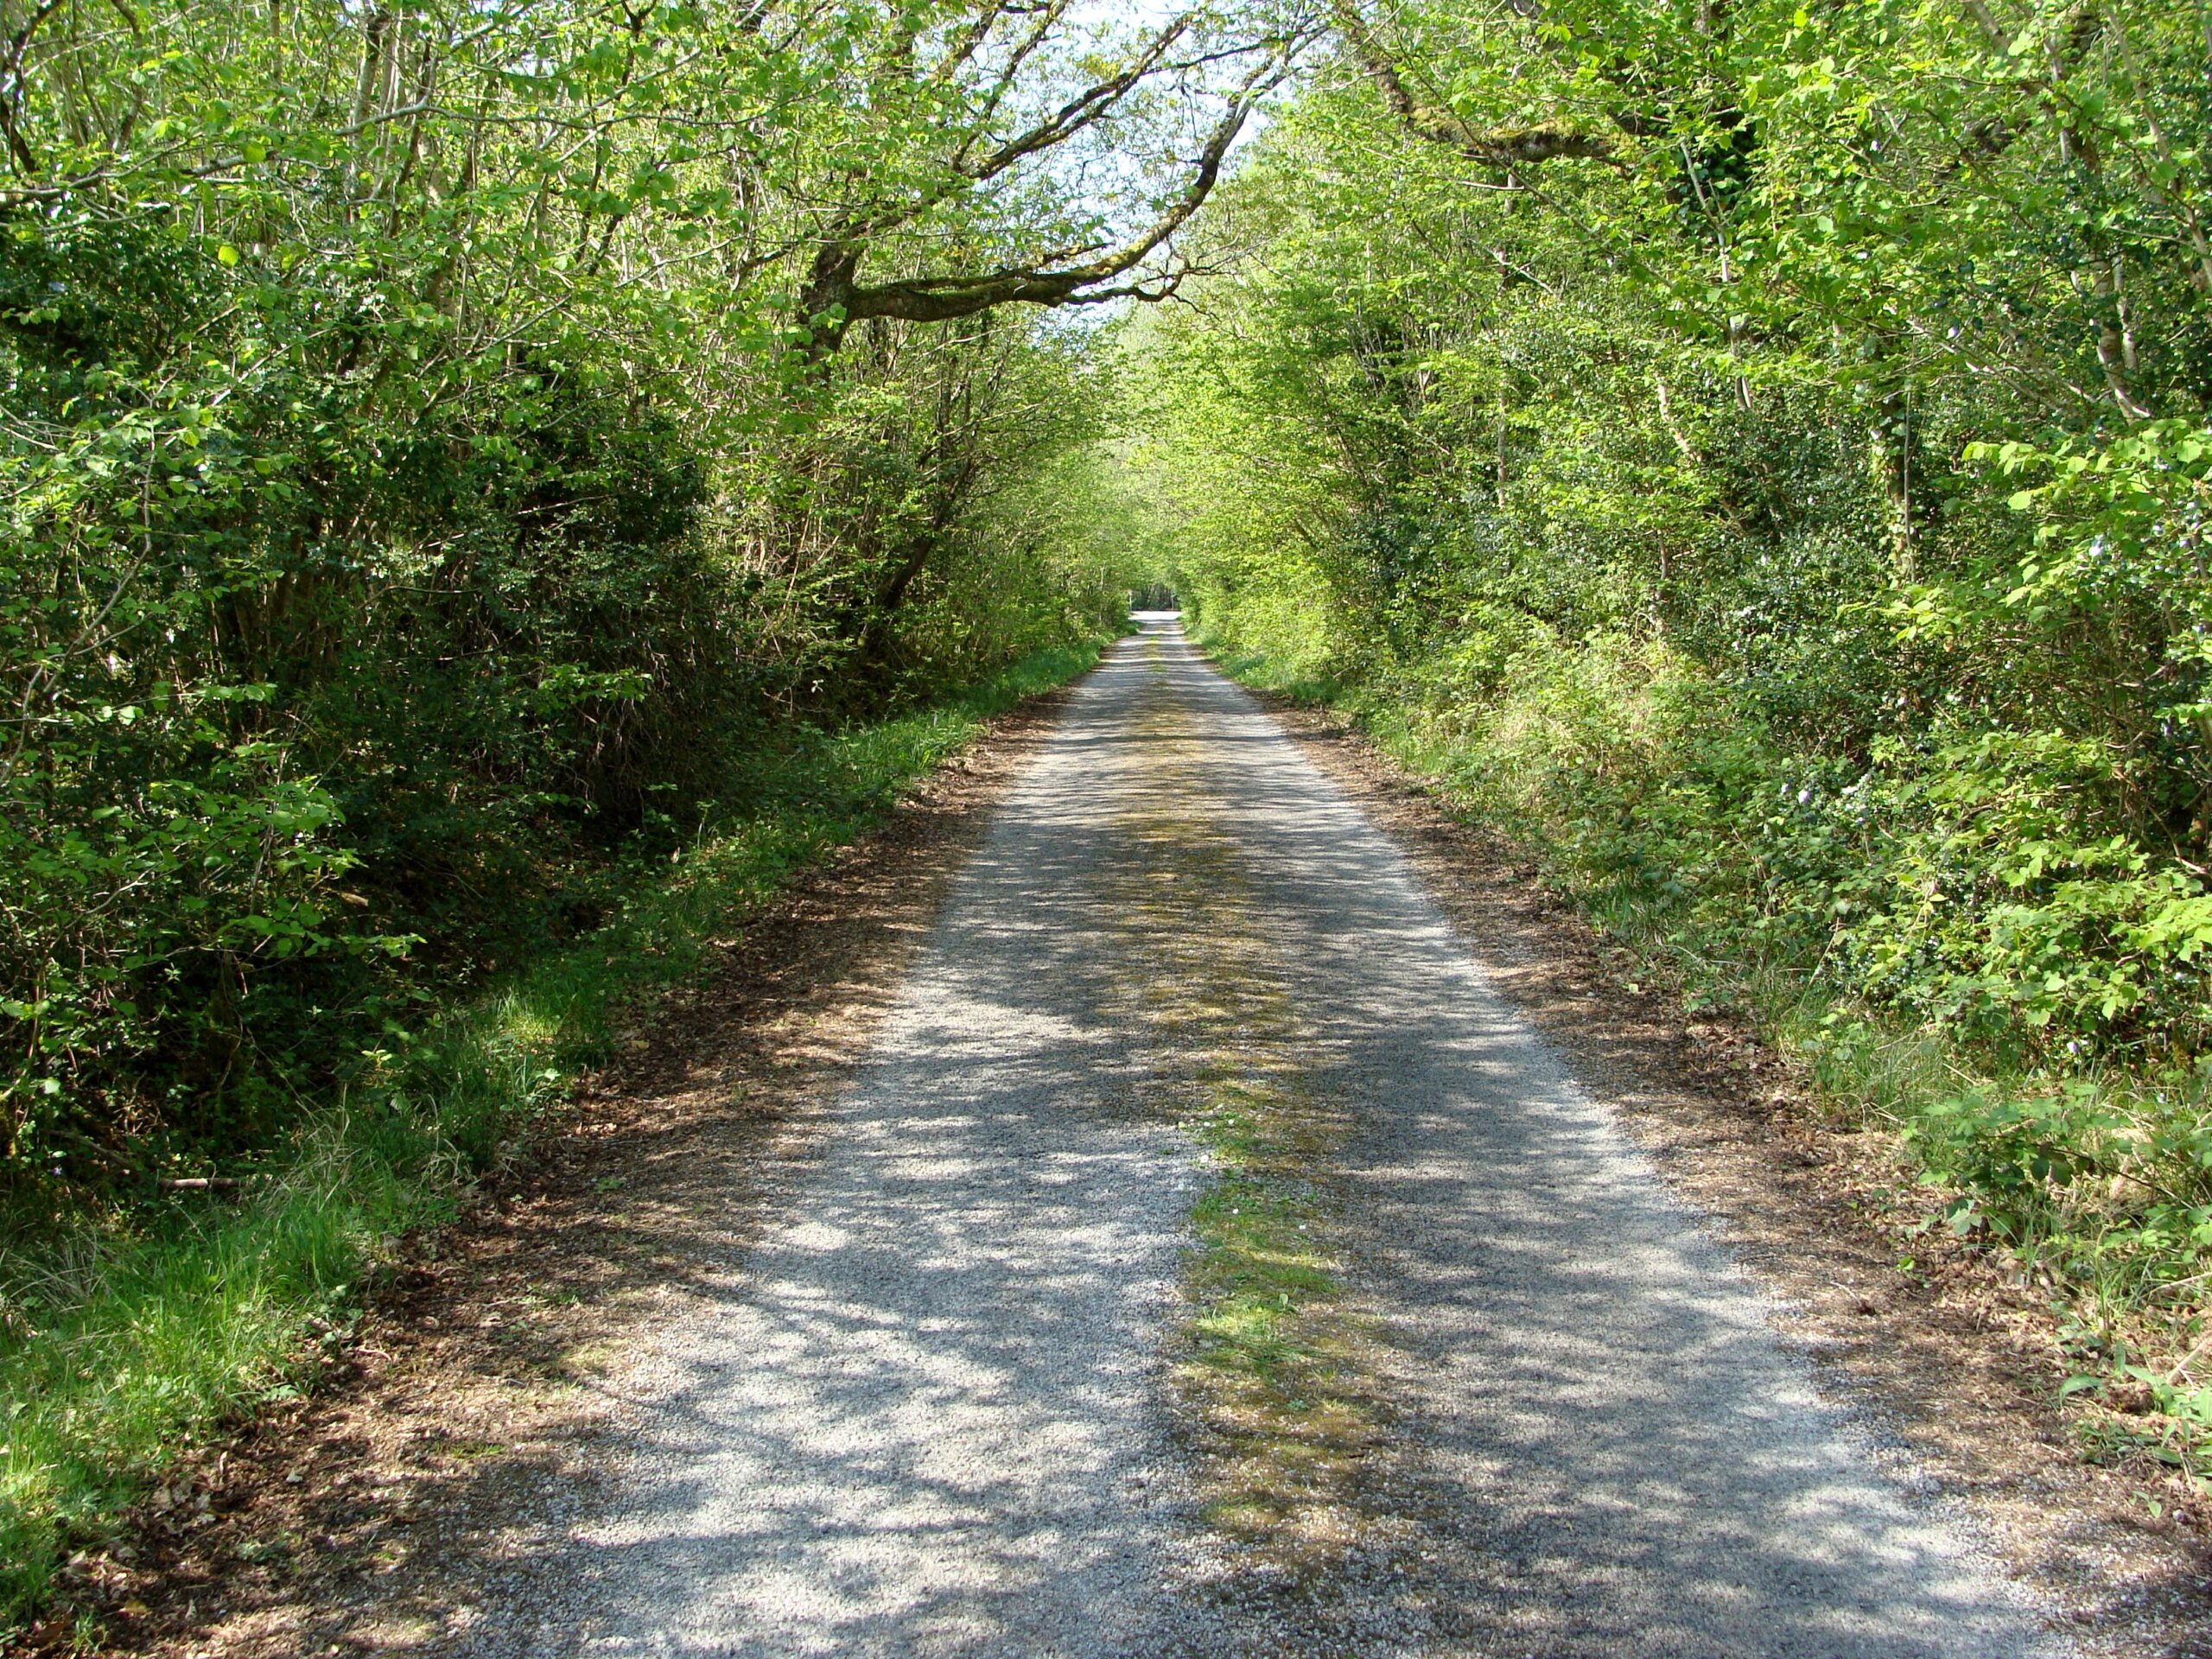 445. trail goes down tree shaded laneway